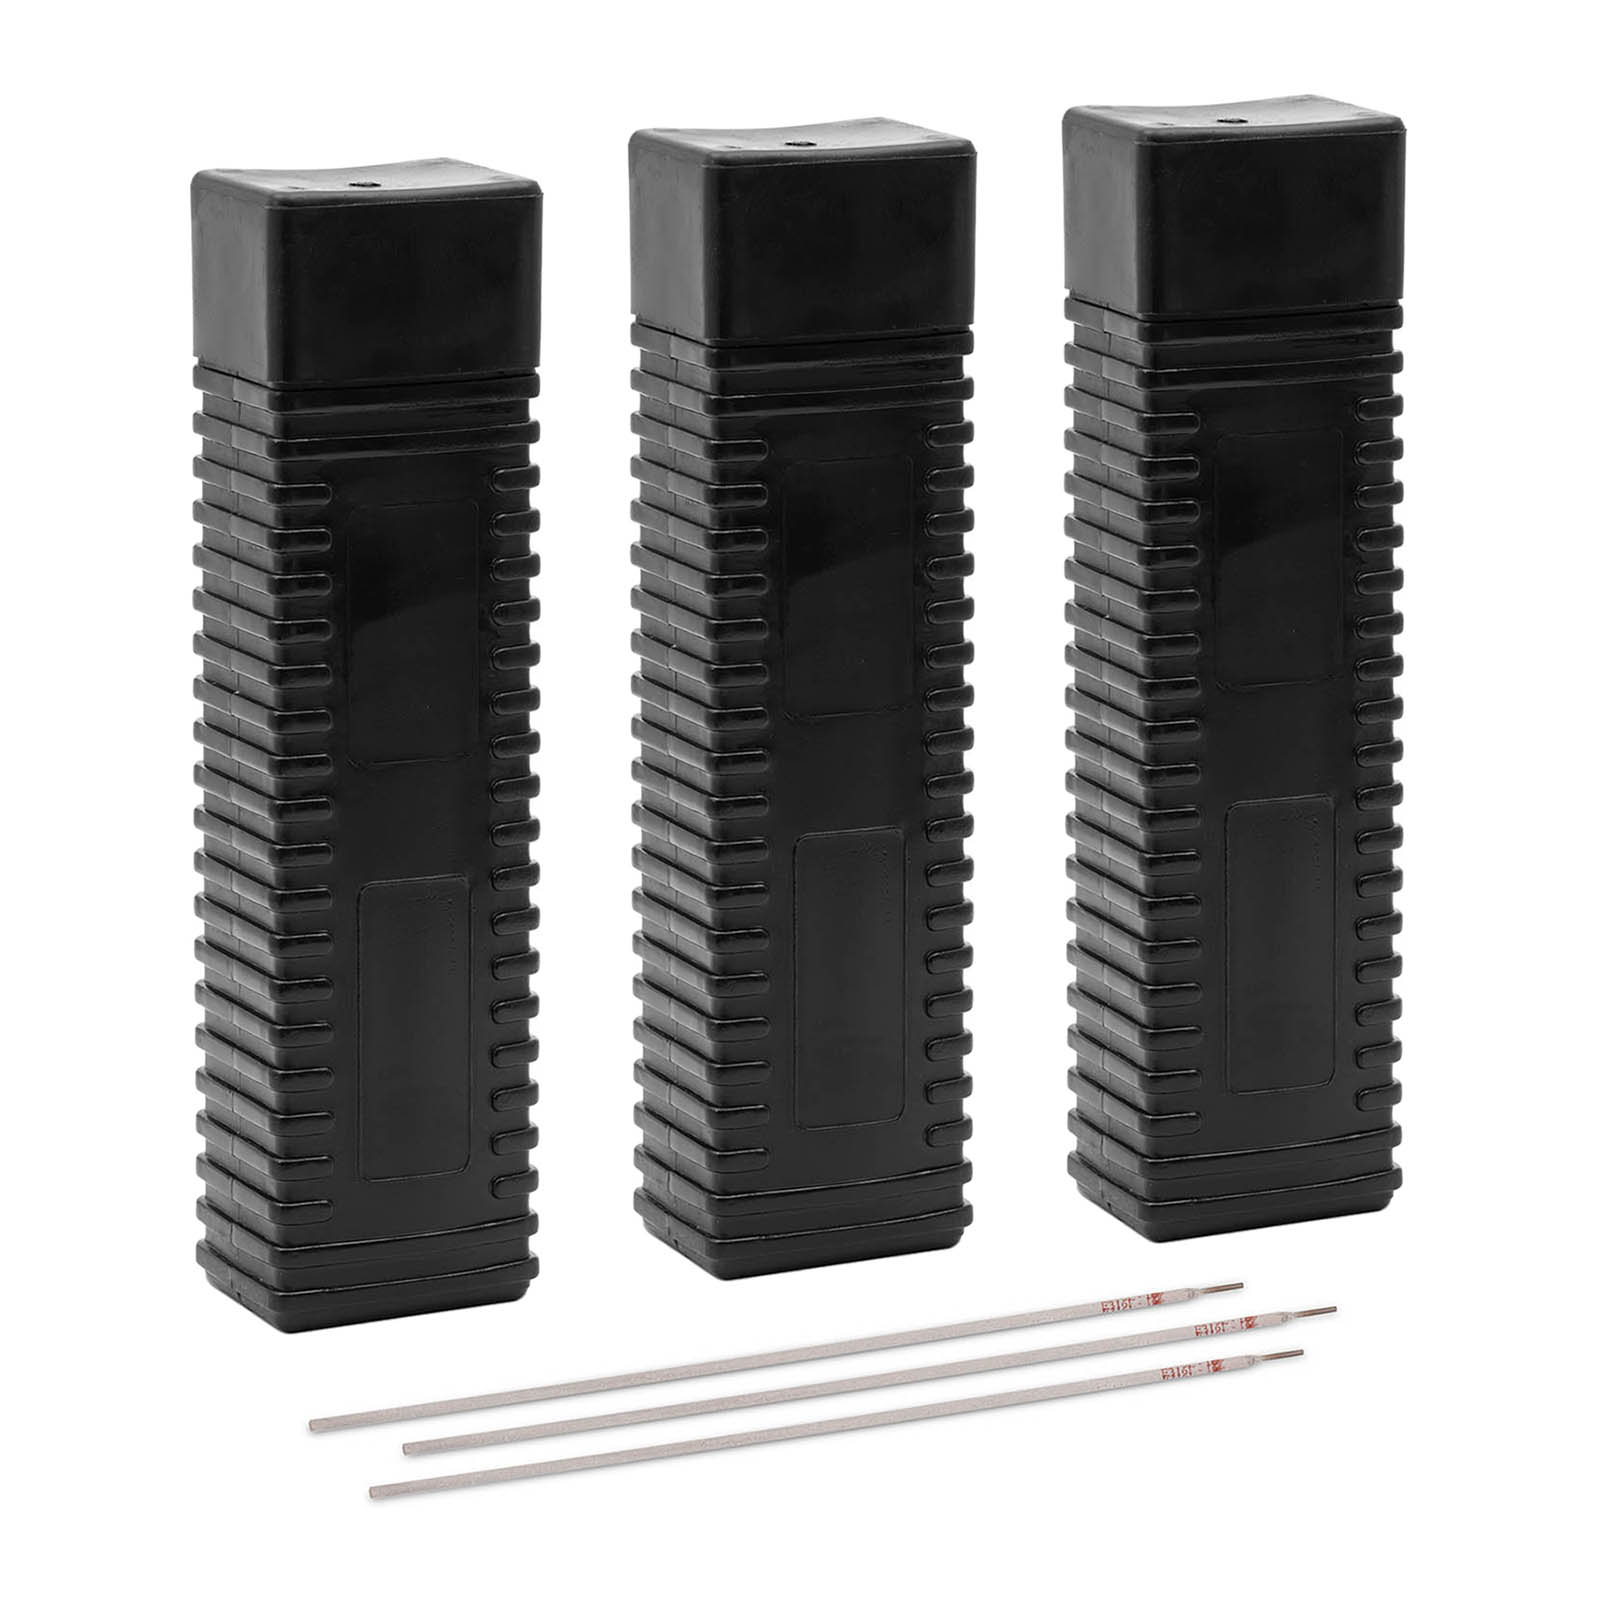 Set di 3 elettrodi per saldatura per acciai inossidabili - E316-L17 - Acido rutilico - 3.25 x 350 mm - 3 x 5 kg